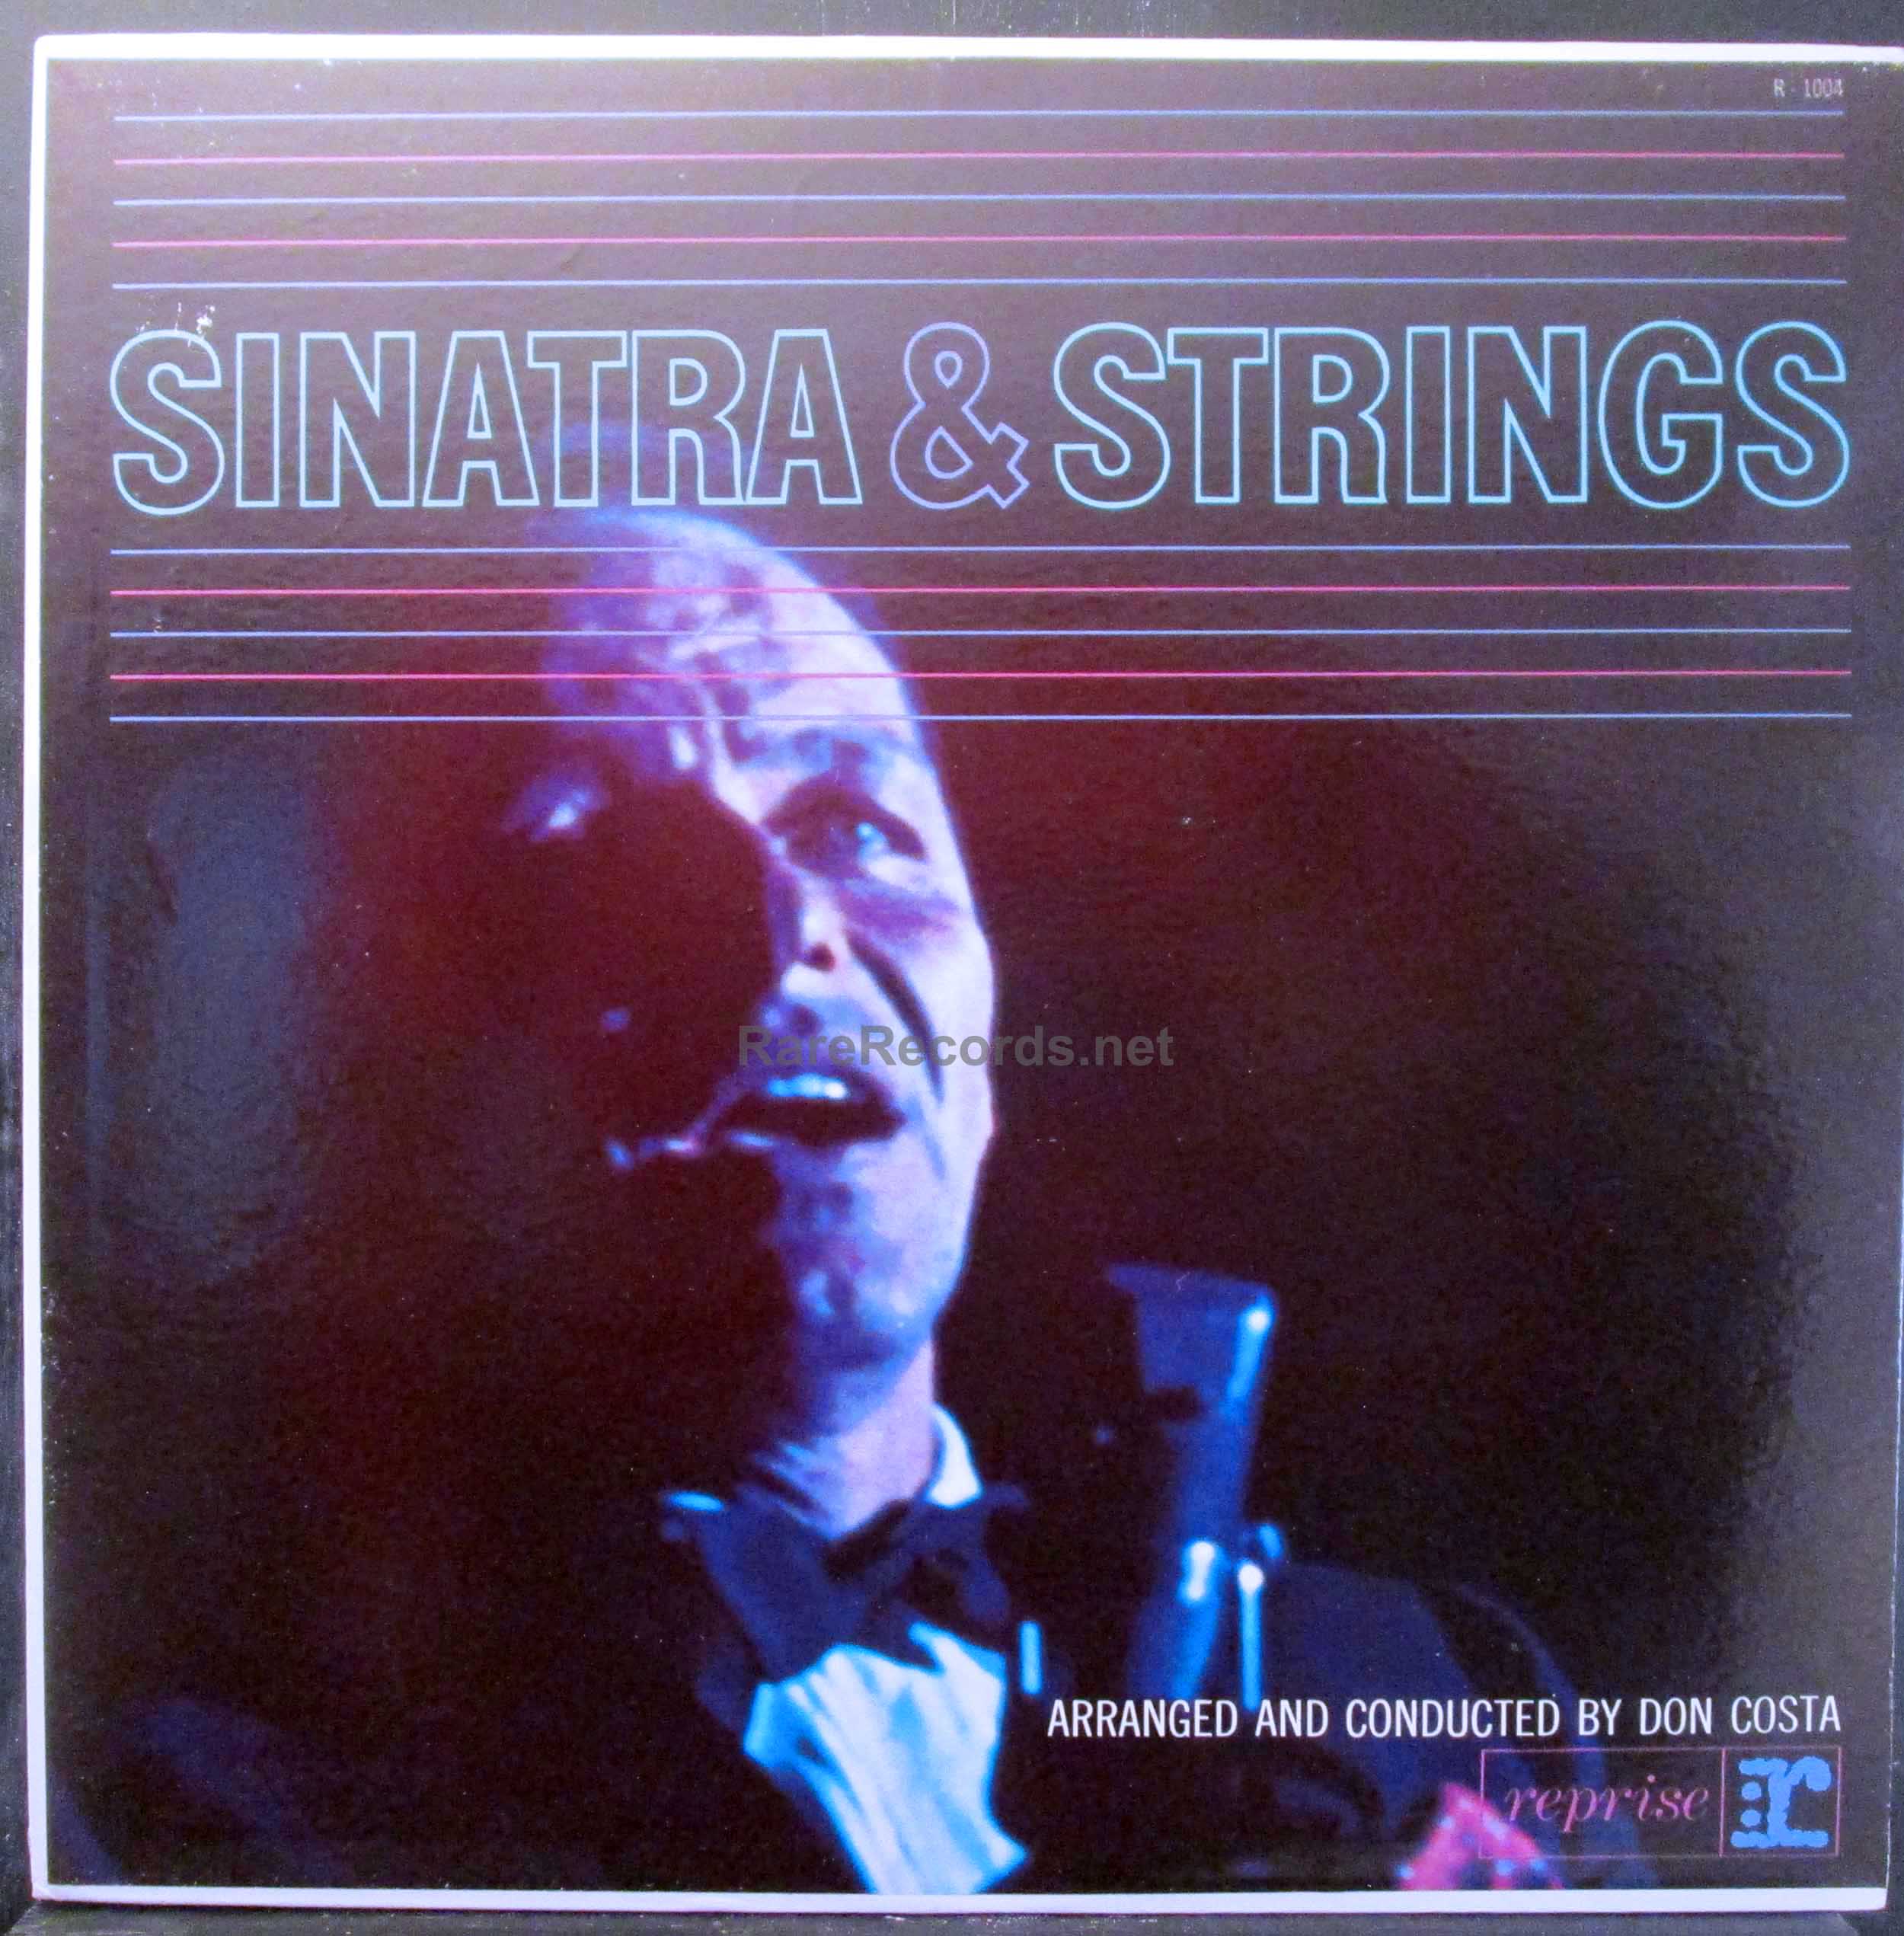 frank sinatra - sinatra and strings u.s. mono lp